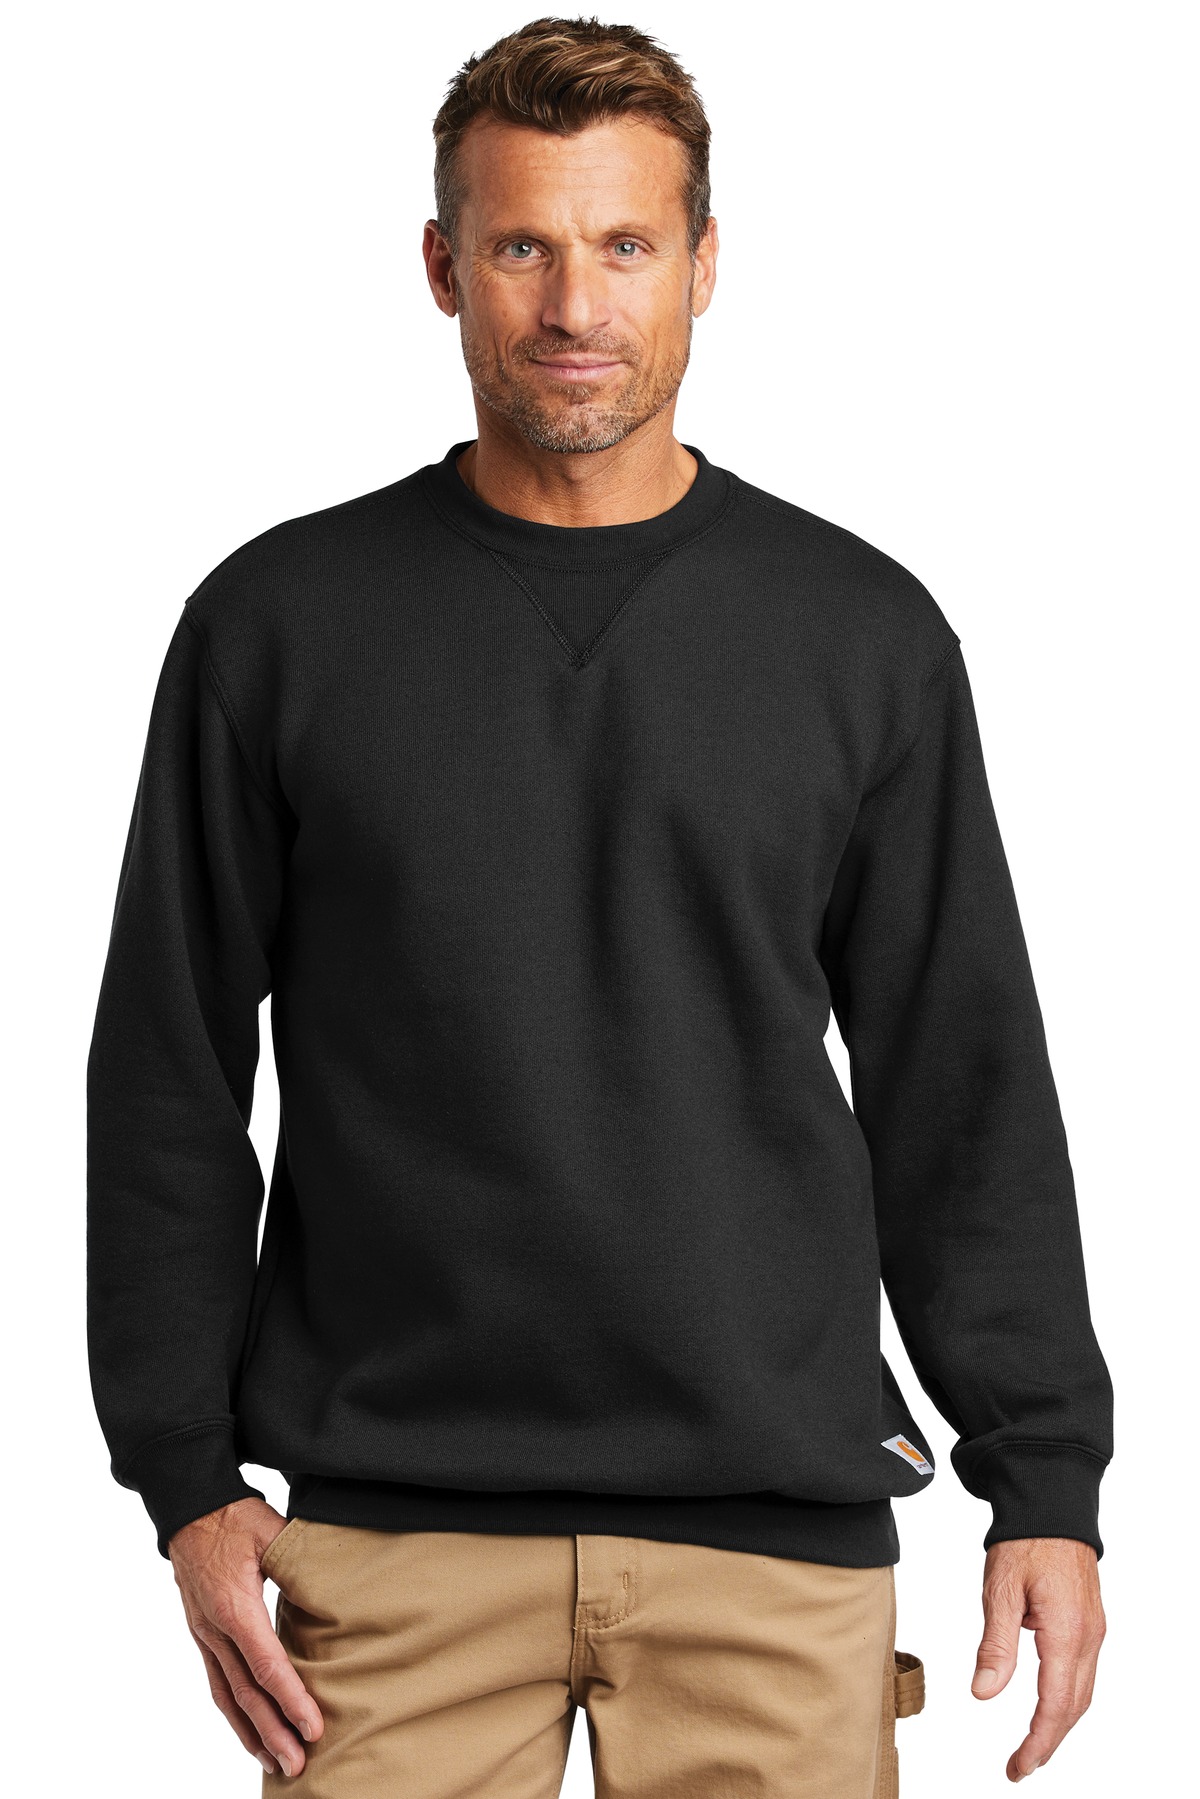 Carhartt Hospitality Sweatshirts & Fleece ® Midweight Crewneck Sweatshirt.-Carhartt